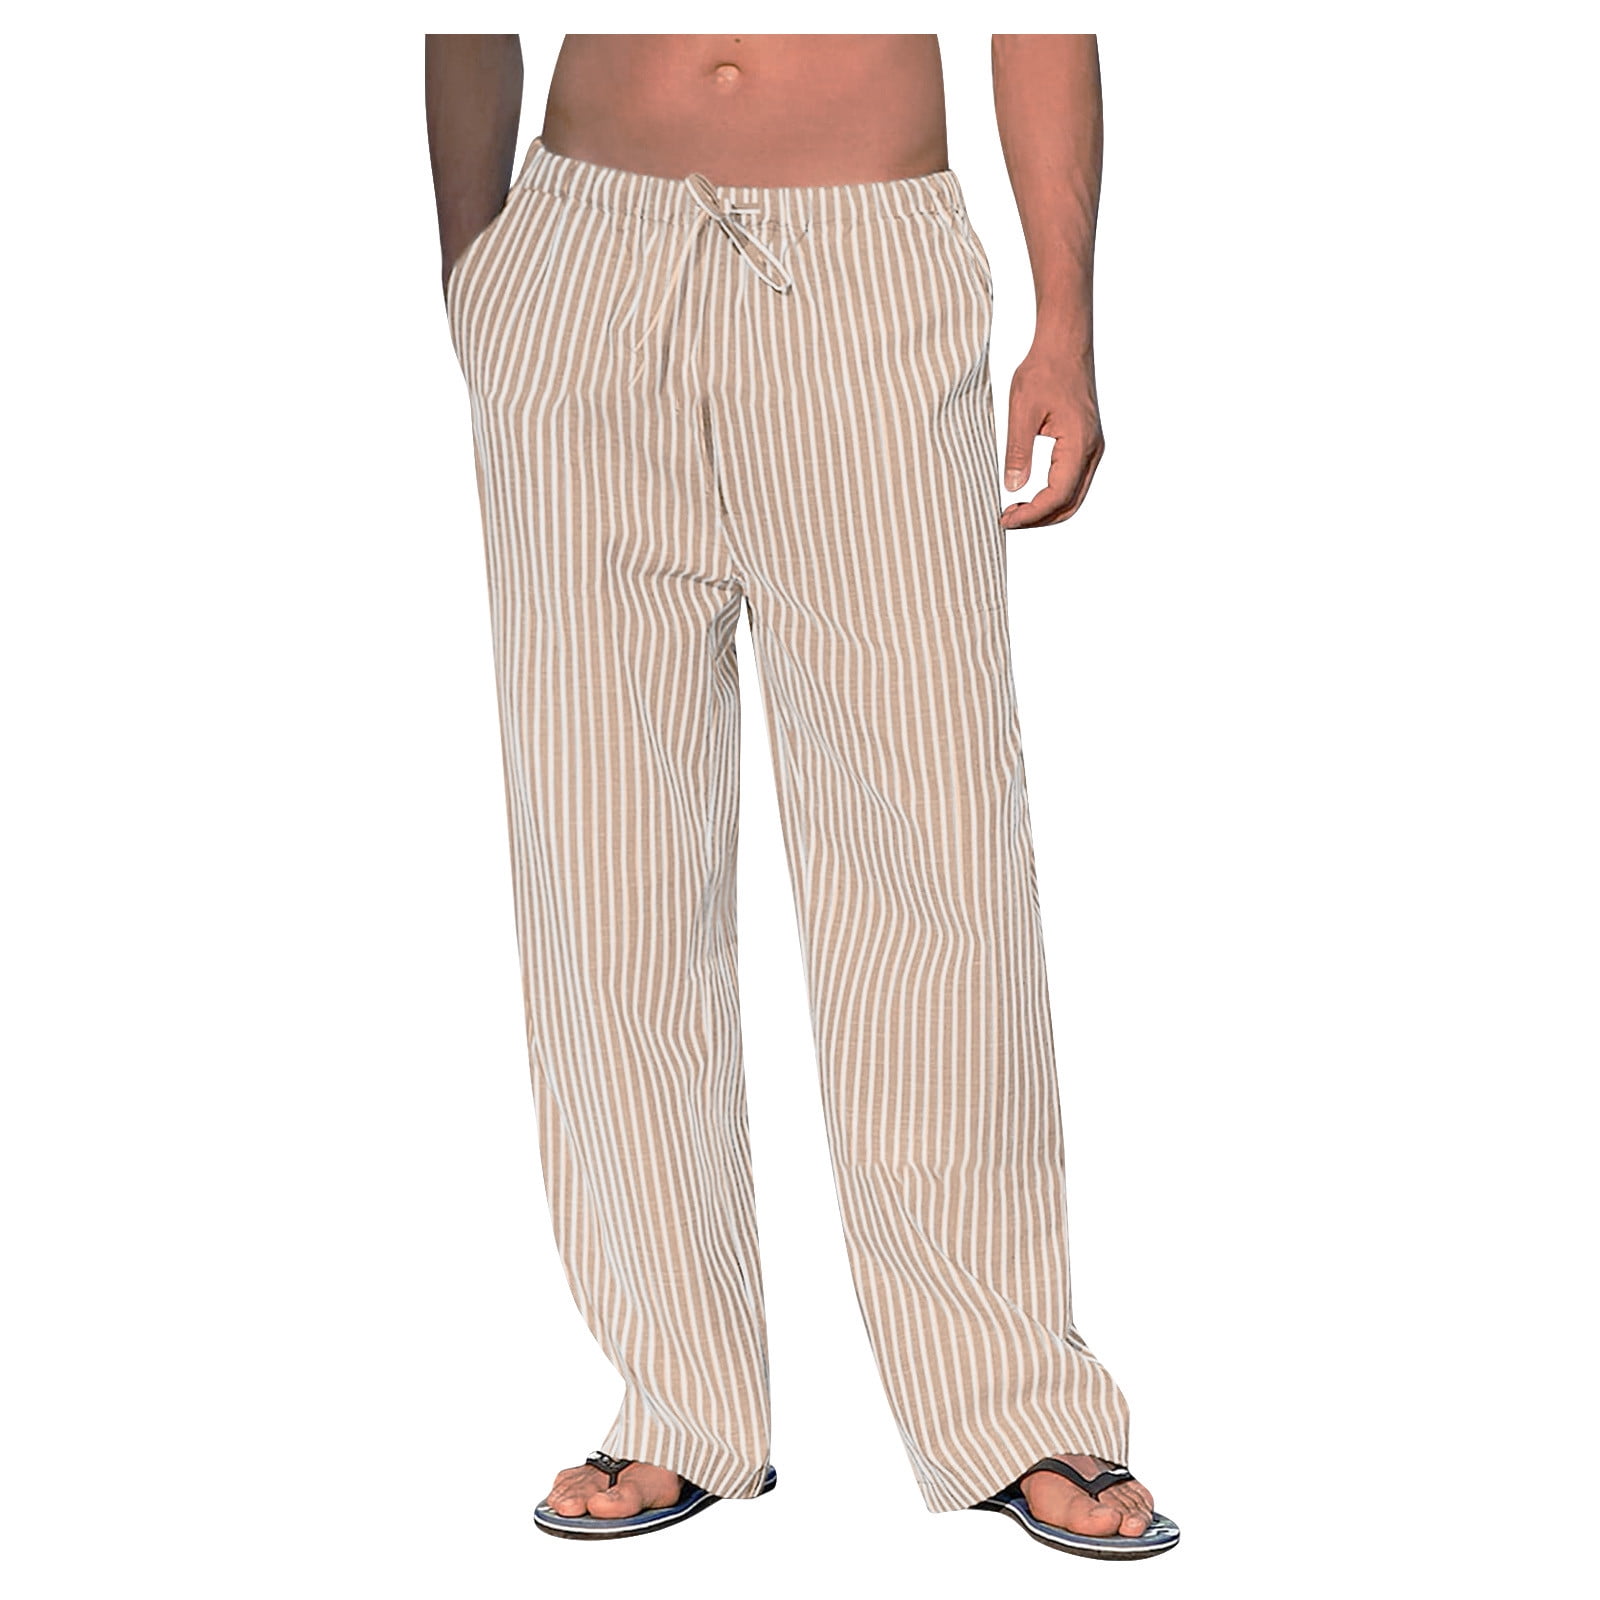 IROINNID Pant's For Men Relaxed Cigarette Pants Drawstring Breathable  Cotton Linen Loose Pants Solid Color Elastic Waist Pants